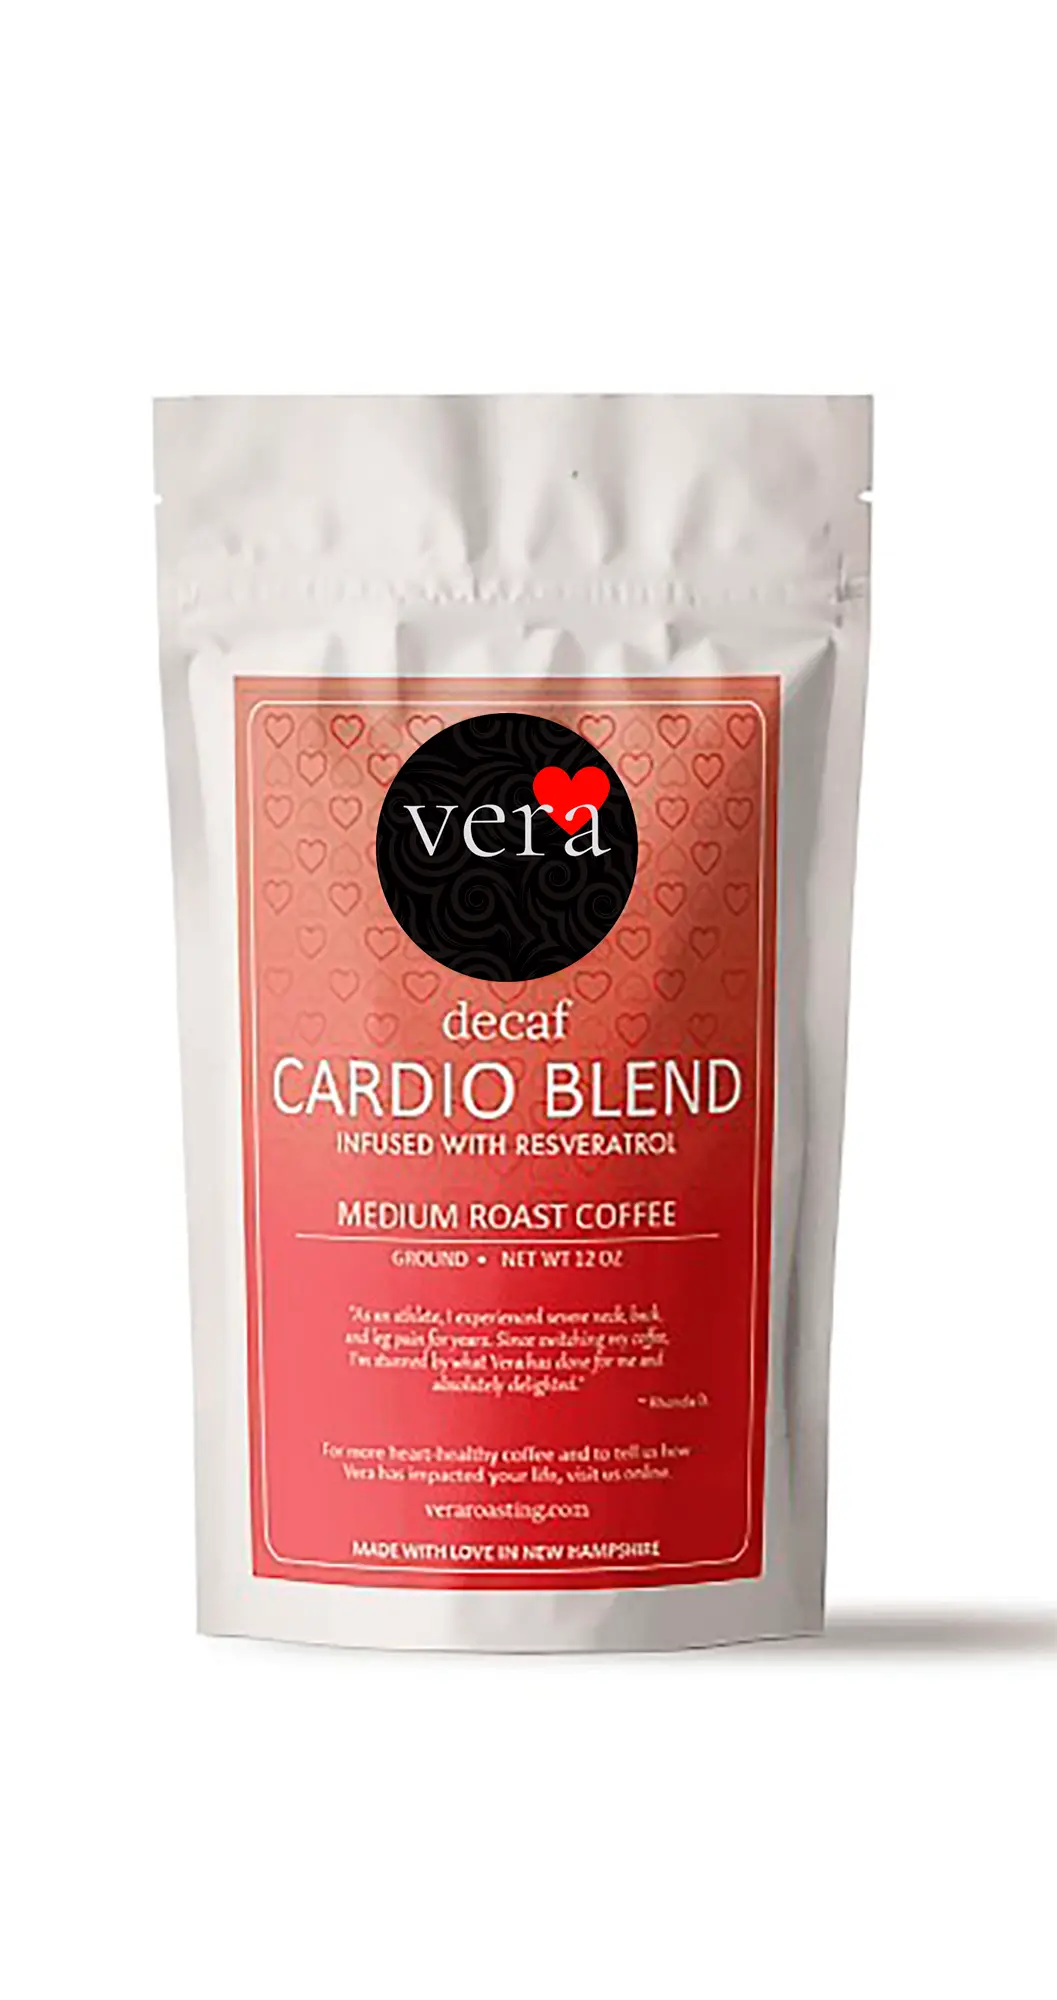 Decaf Cardio Blend Vera Roasting Co.